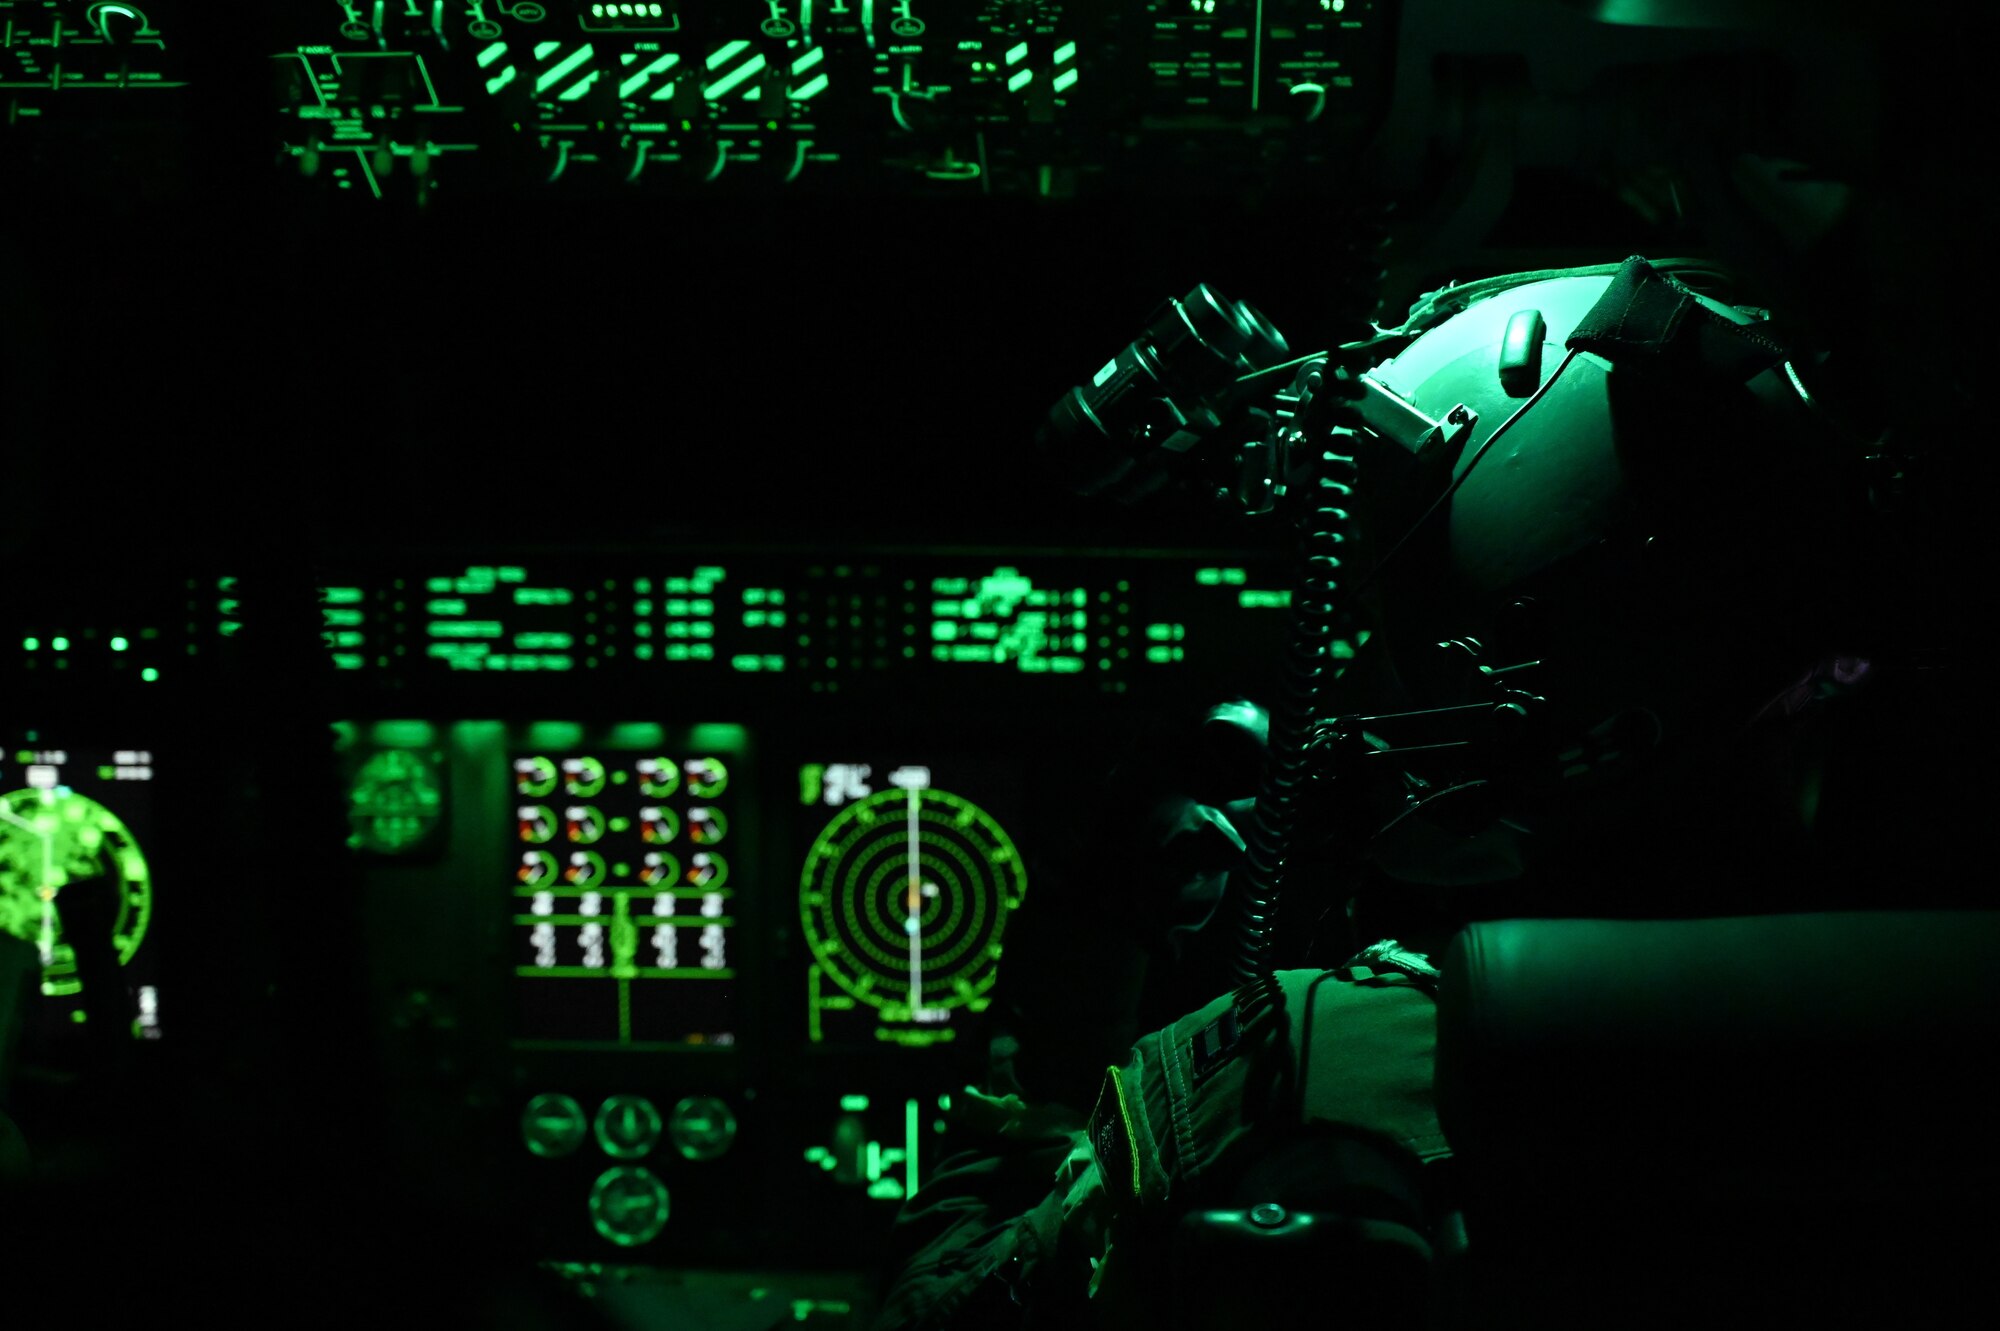 A pilot flies at night in an illuminated green cockpit.